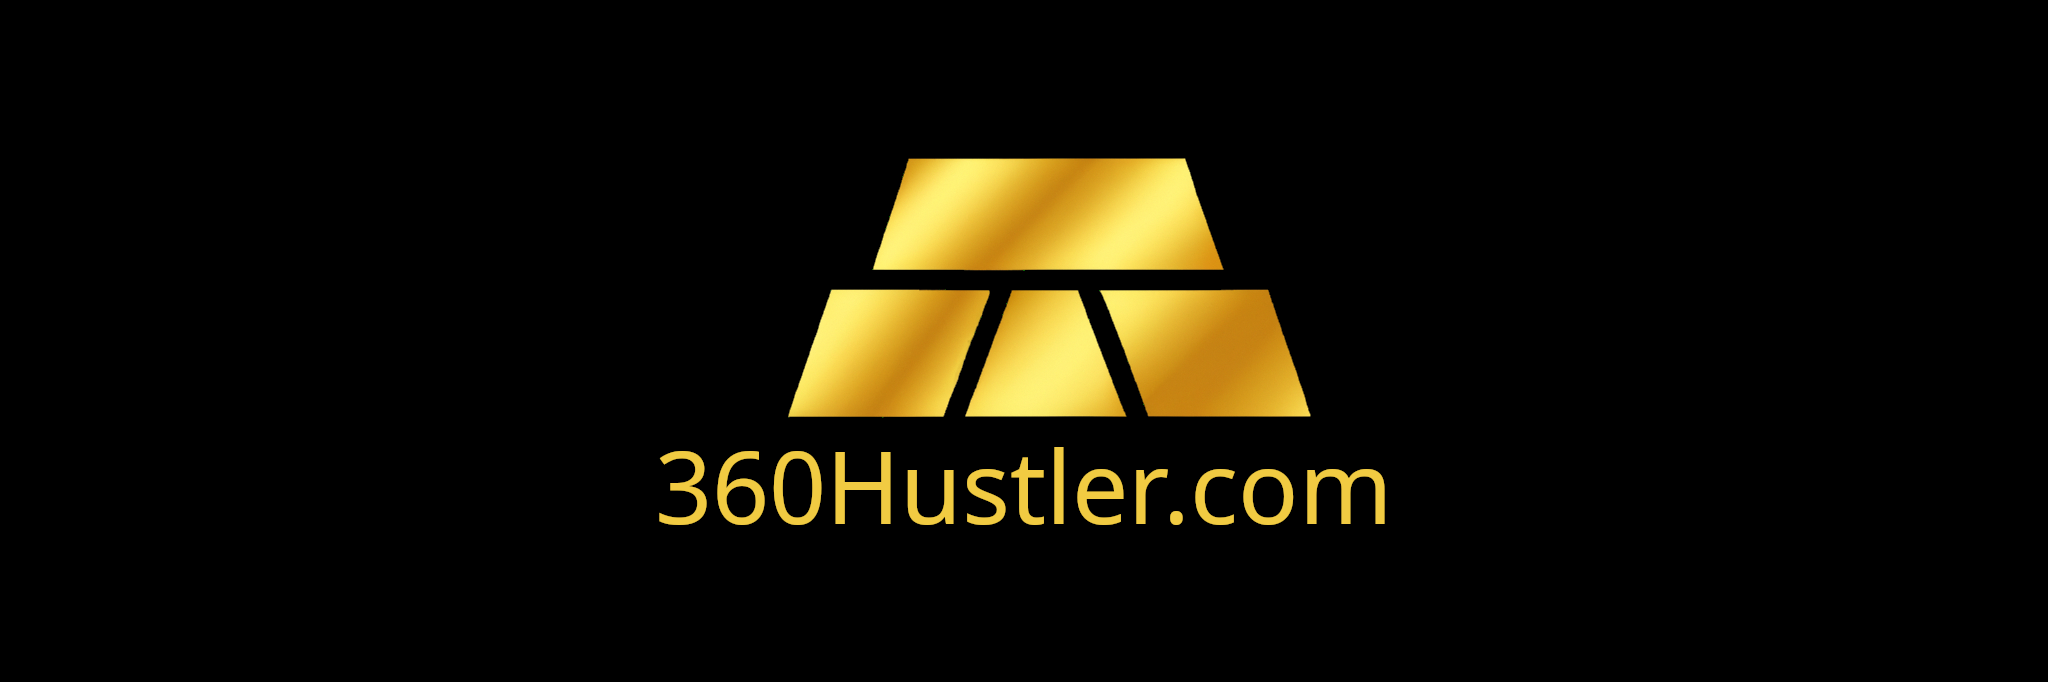 360 Hustler .com Official Logo